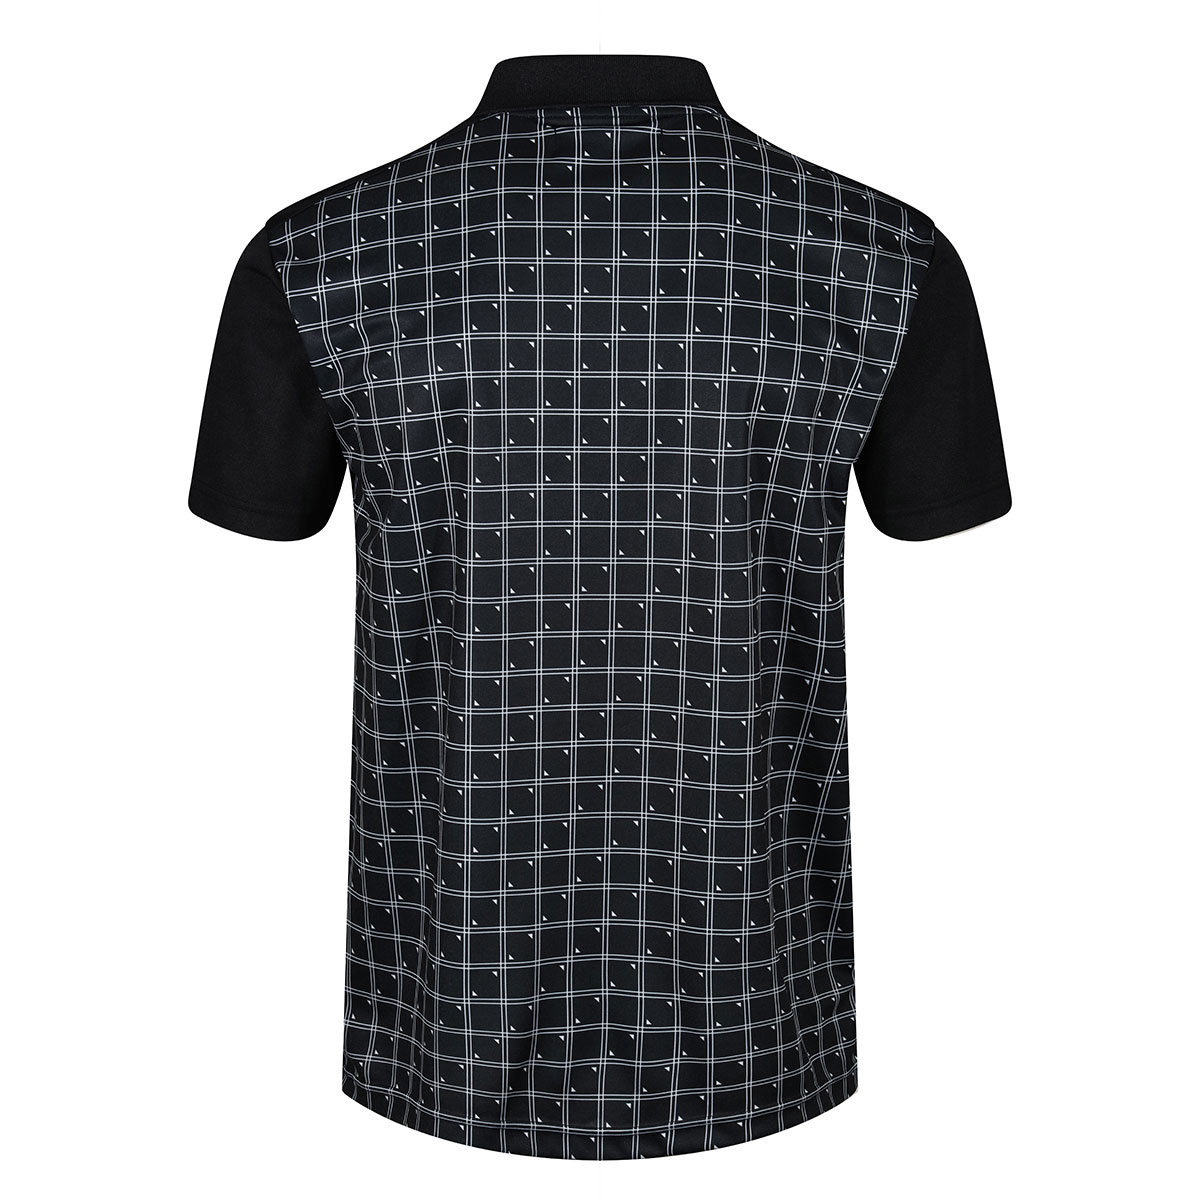 Benross Men's Grid Print Golf Polo Shirt from american golf